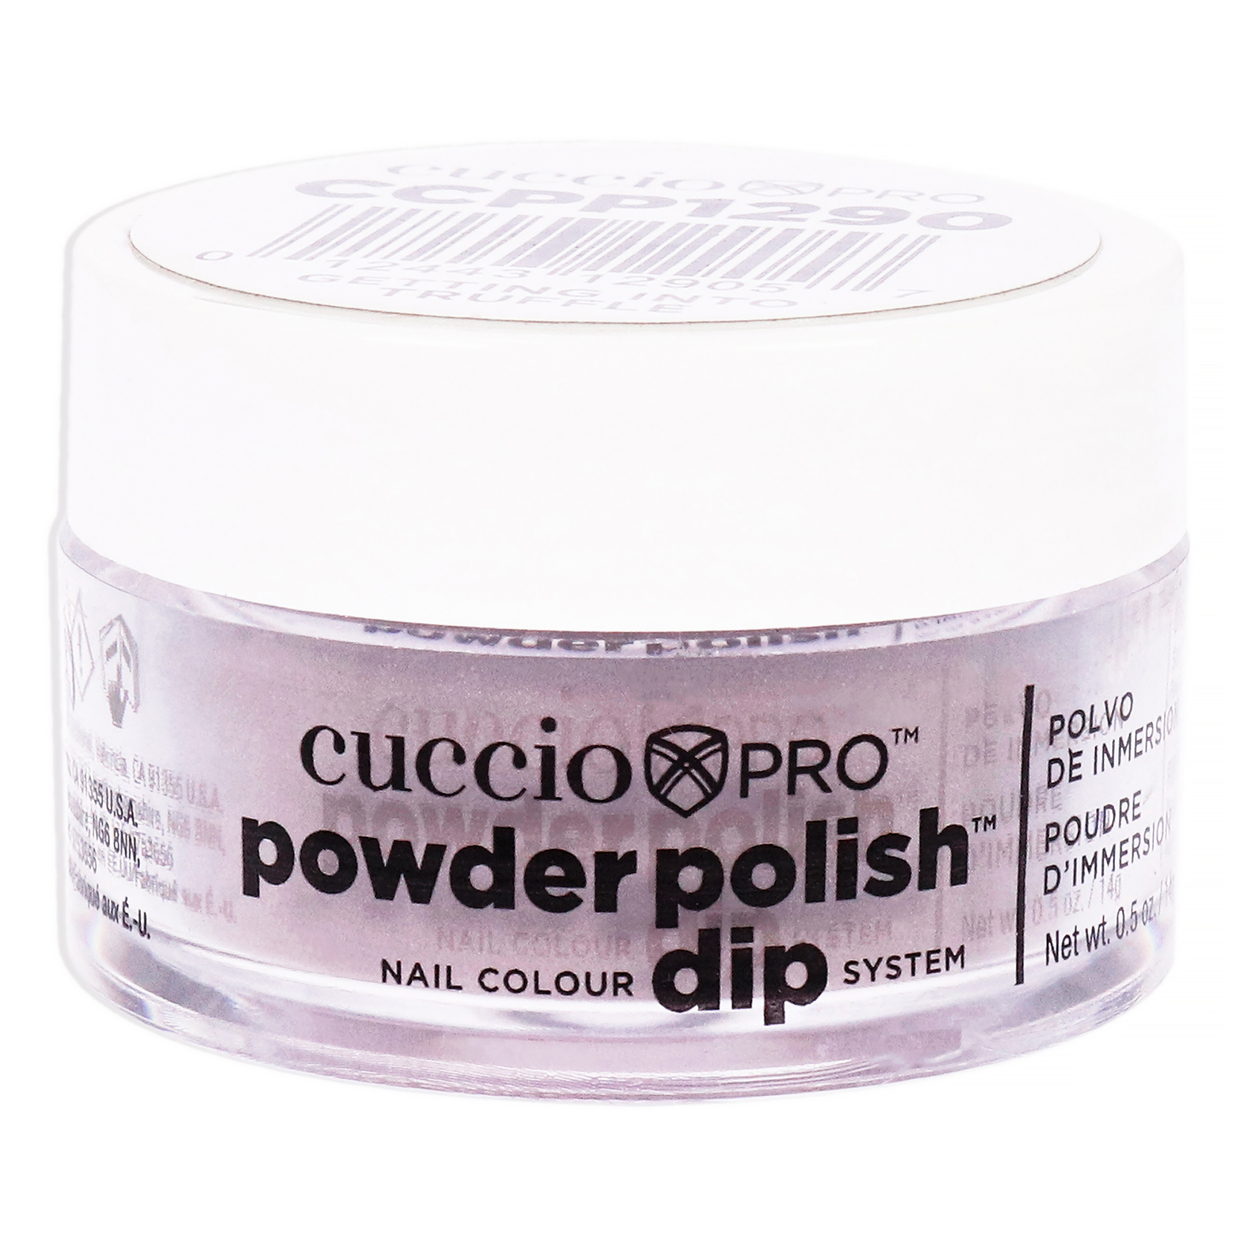 Cuccio Colour Pro Powder Polish Nail Colour Dip System - Getting Into Truffle Nail Powder 0.5 Oz